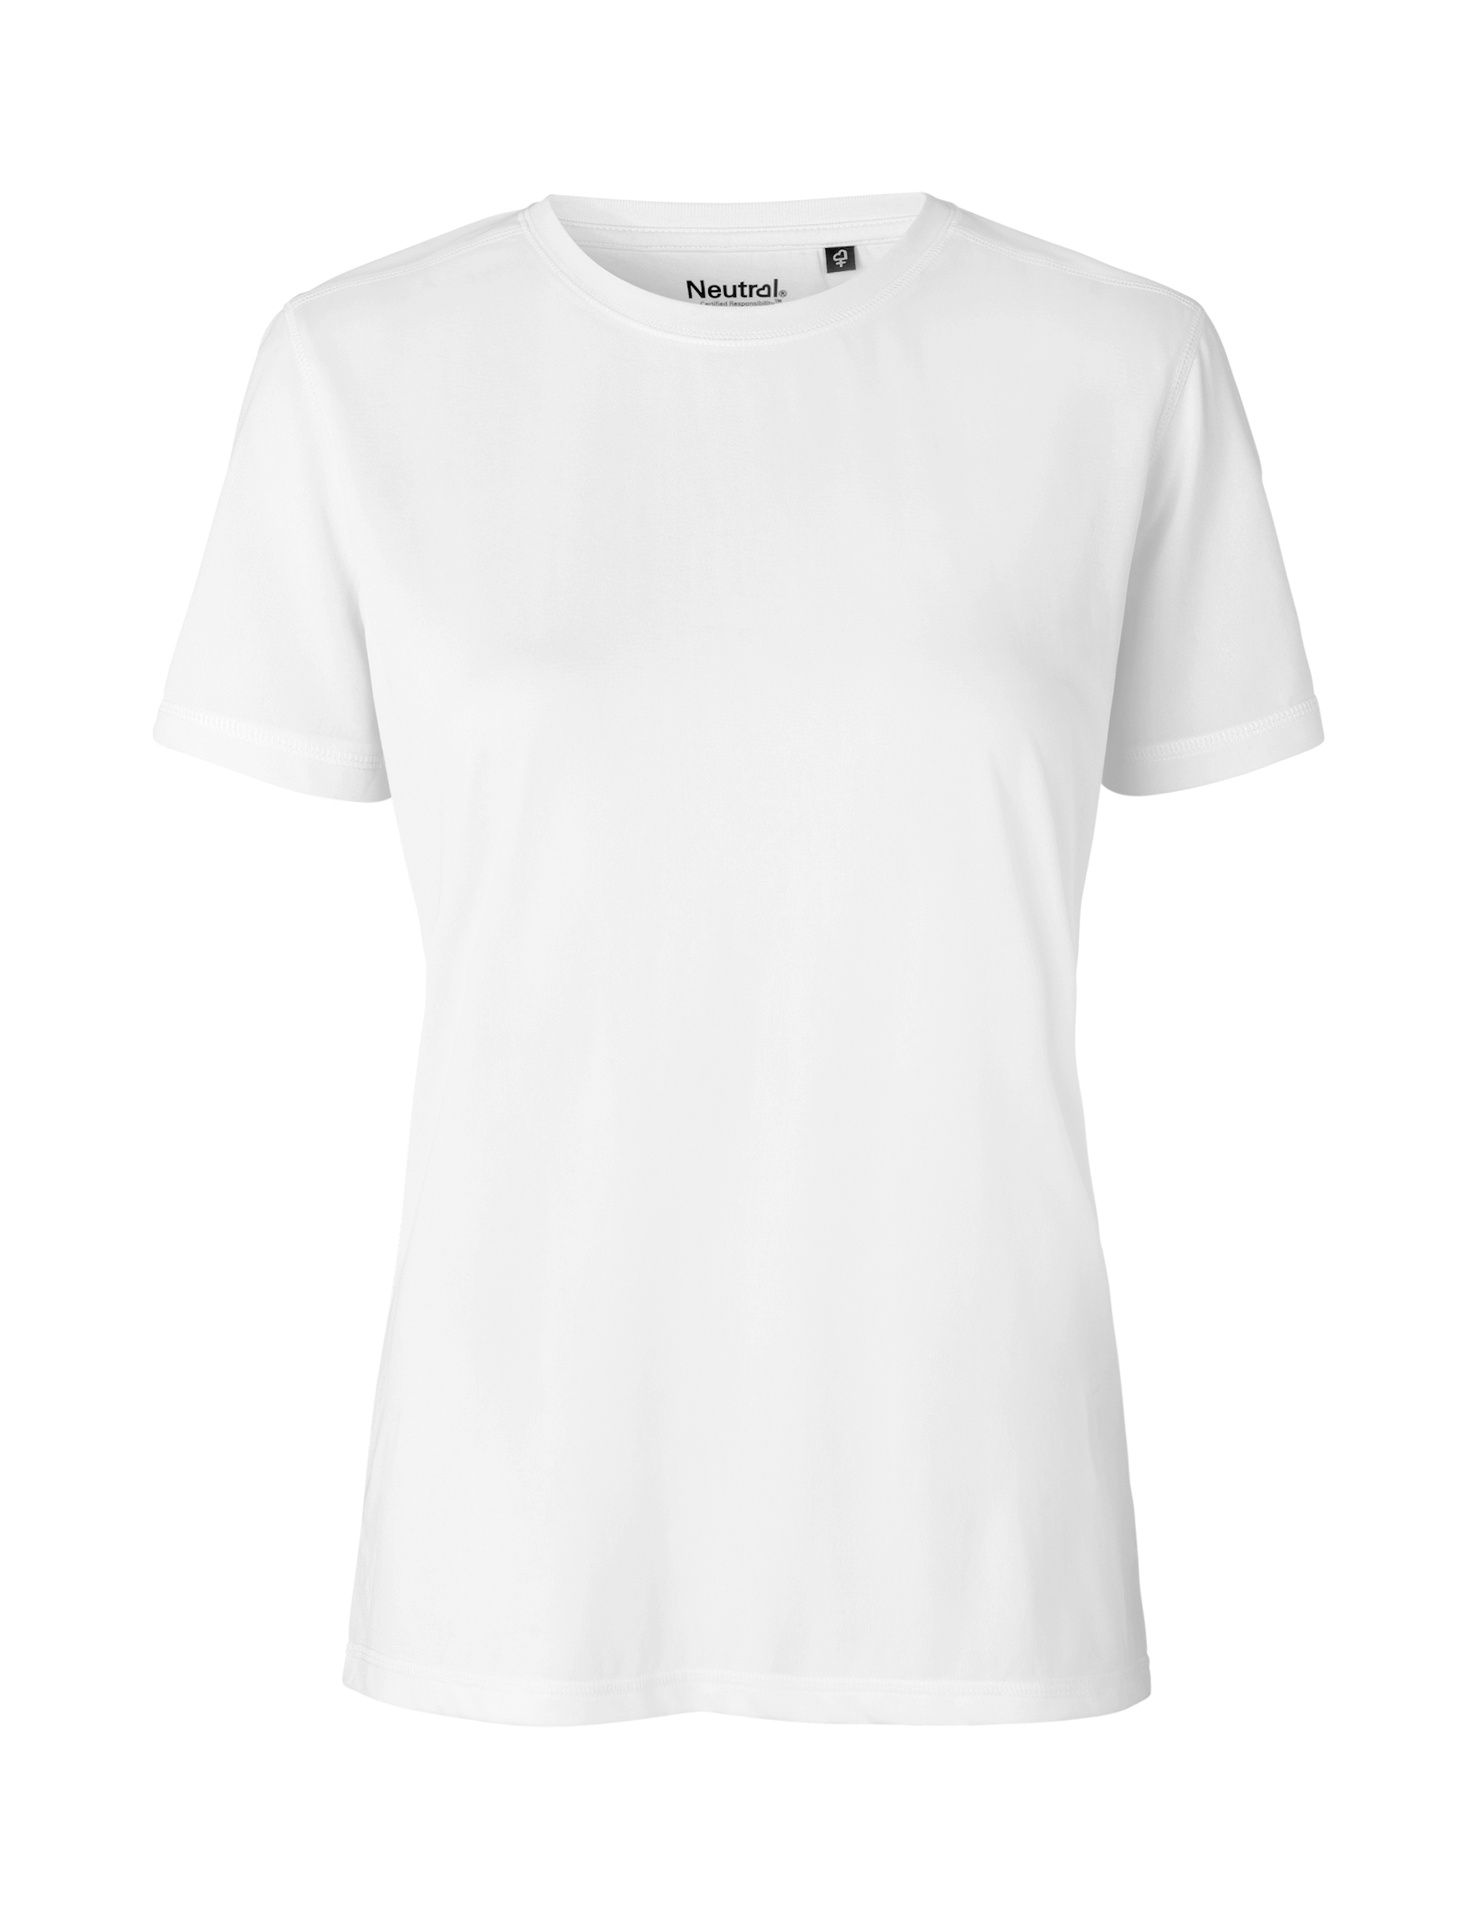 [PR/05192] Ladies Recycled Performance T-Shirt (White 01, XS)